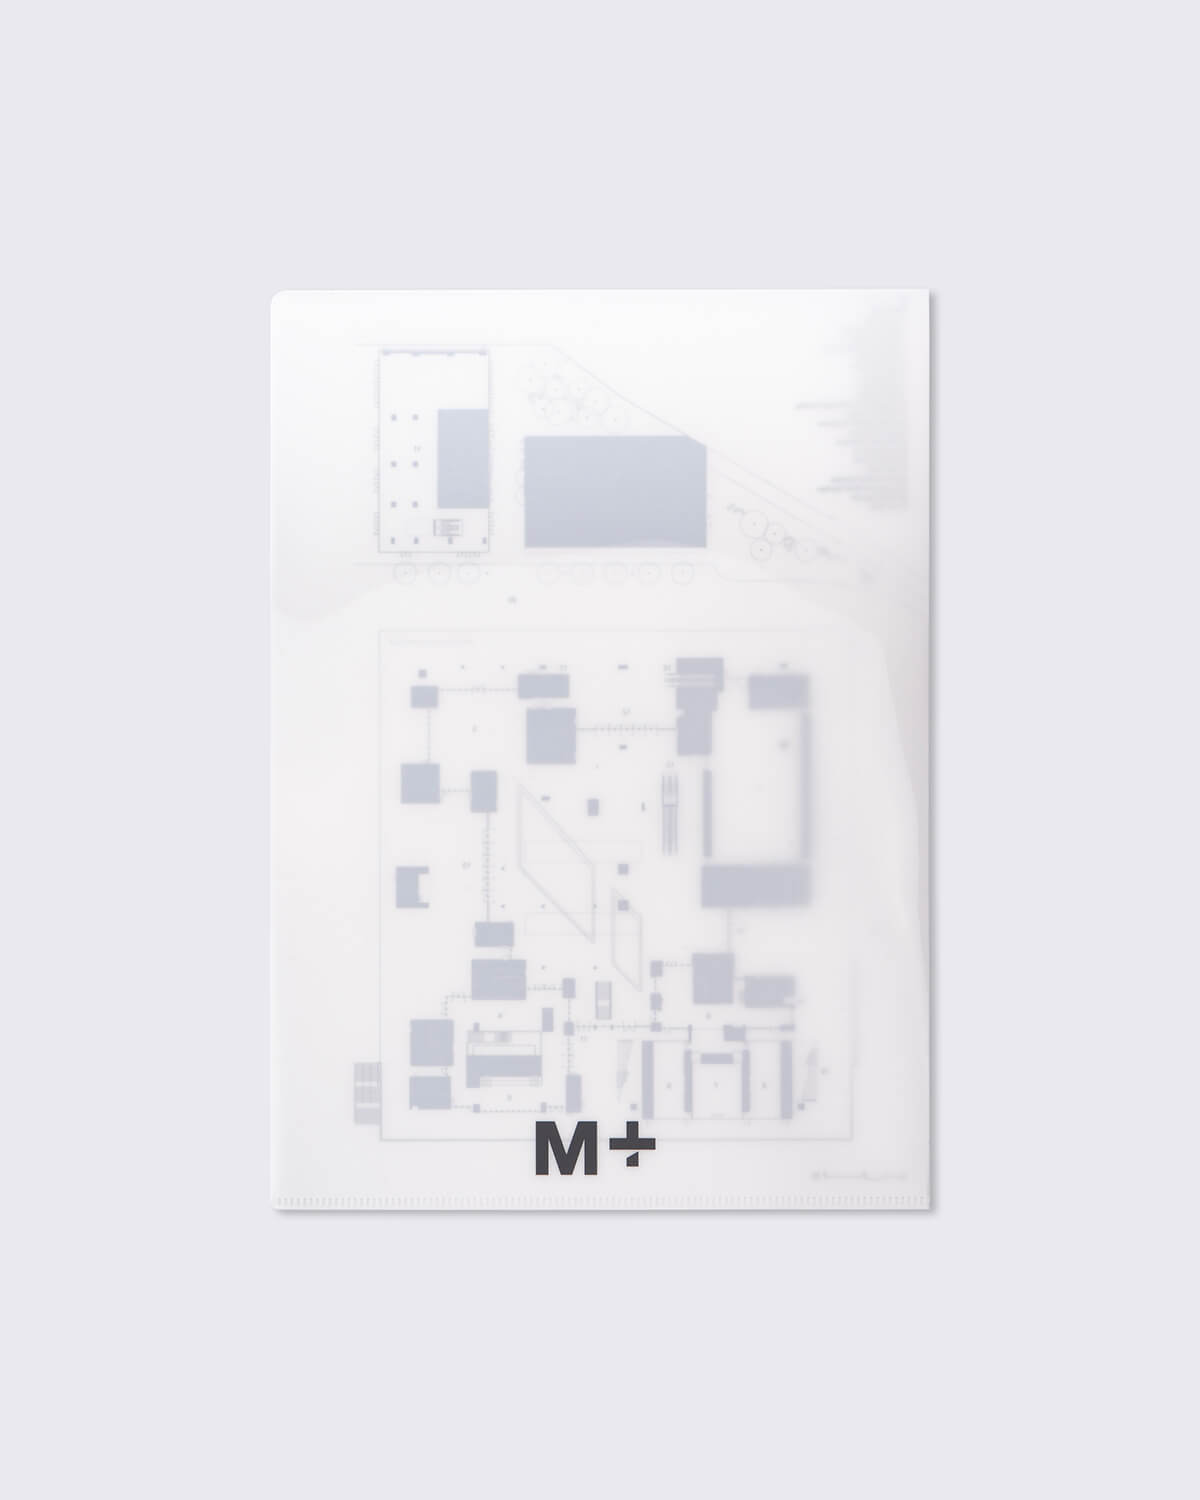 M+大樓地下平面圖文件夾